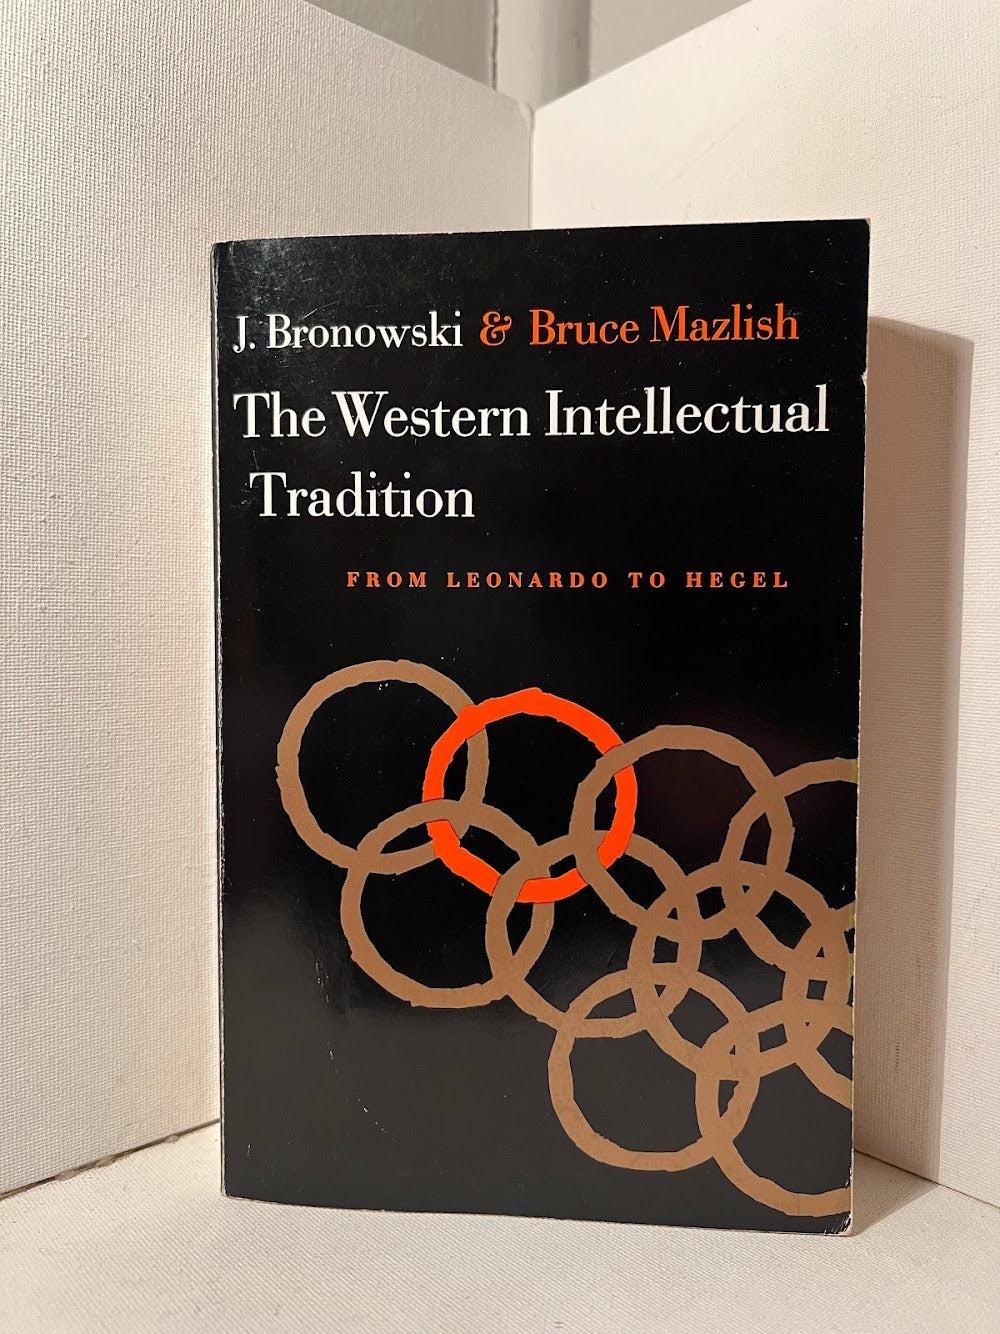 The Western Intellectual Tradition by J. Bronowski & Bruce Mazlish